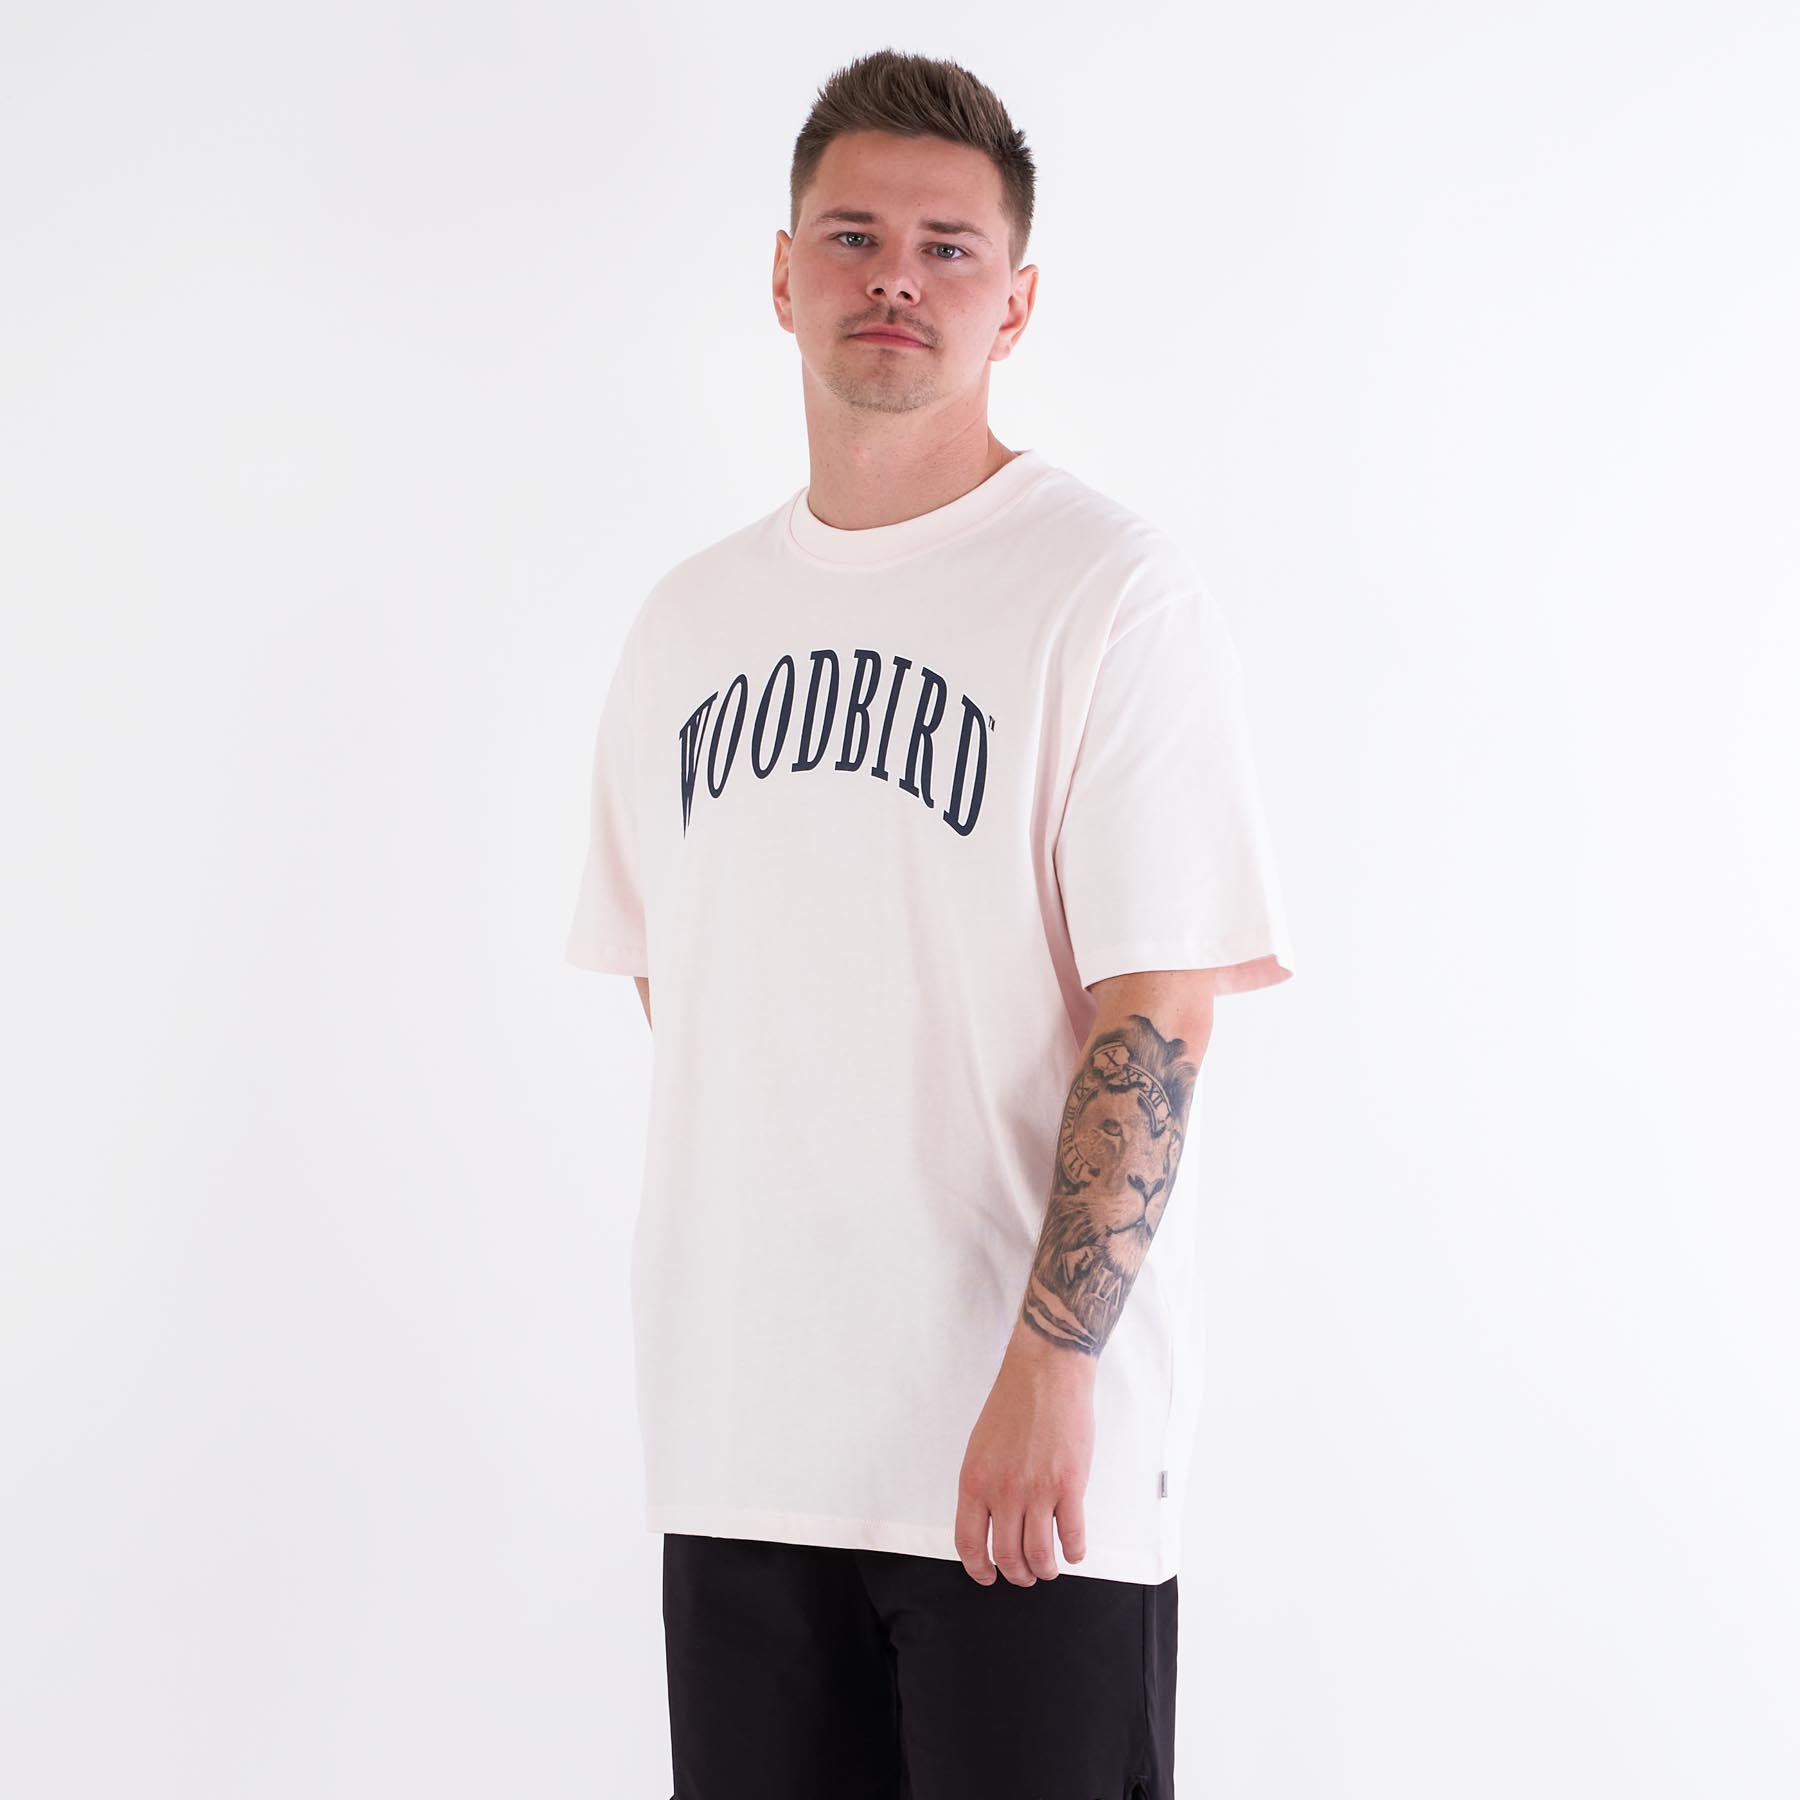 Woodbird - Baine college tee - T-shirts til mænd - Lyserød - XXL